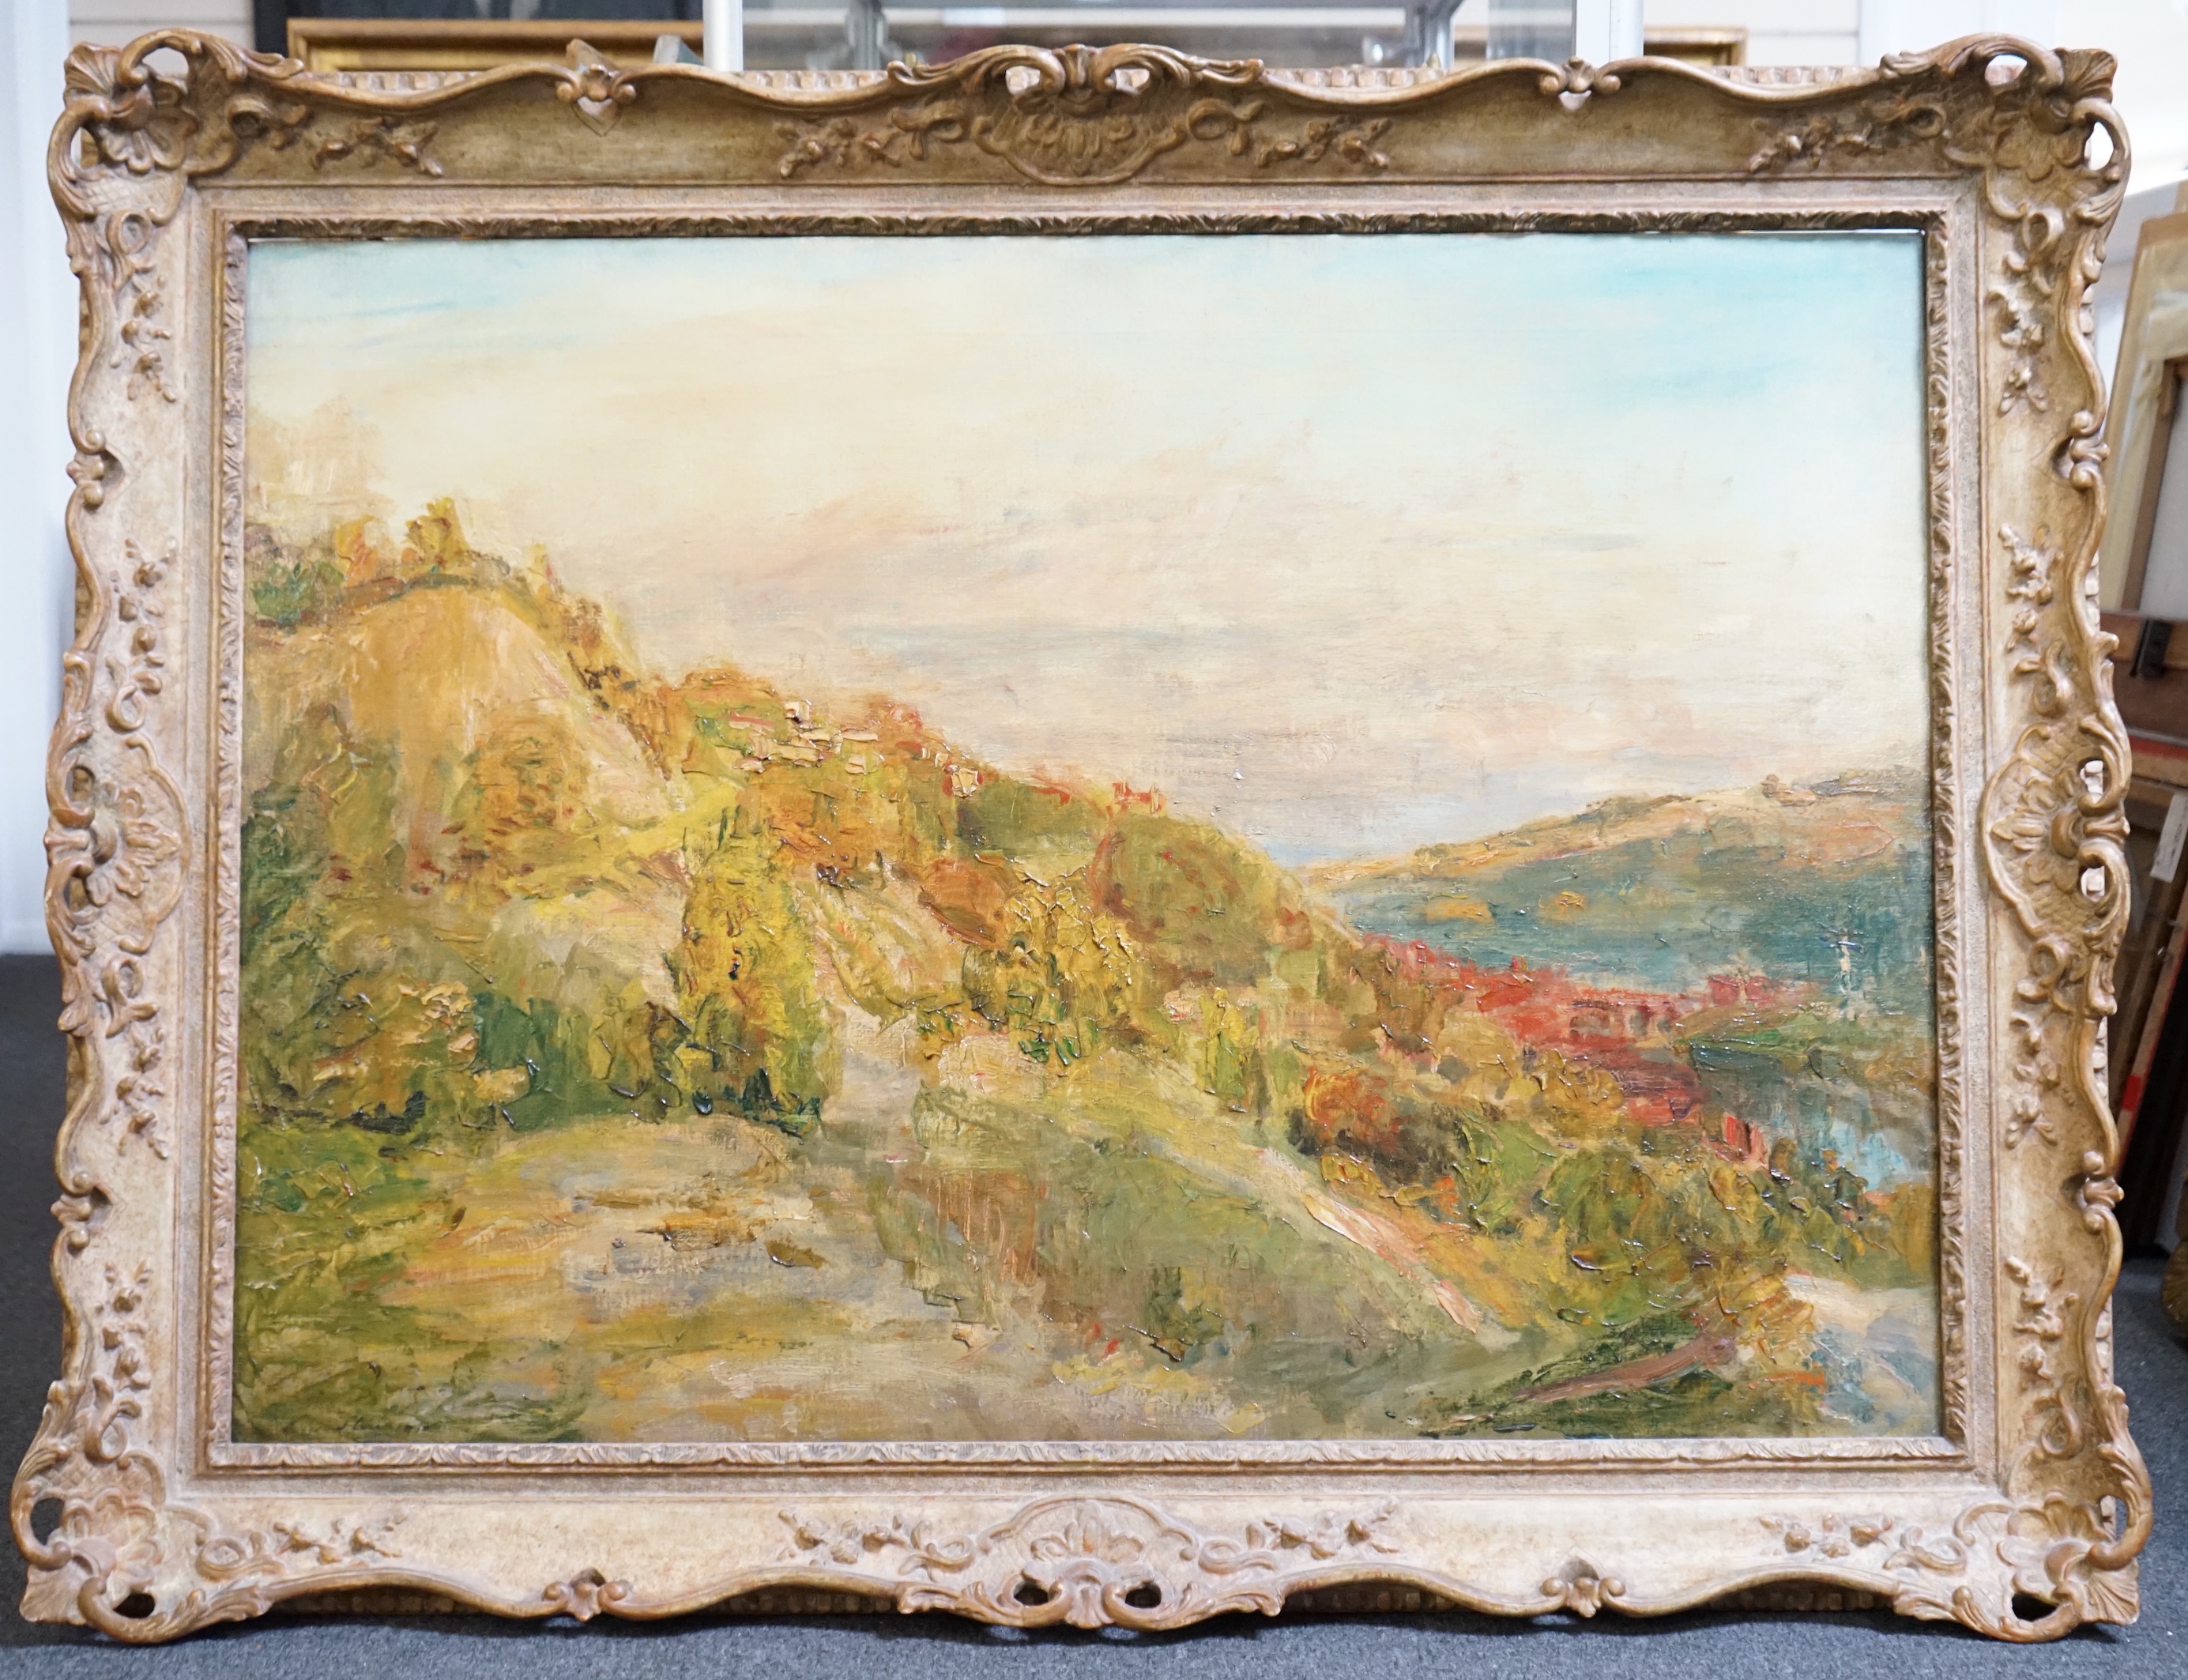 Philip Wilson Steer (British, 1860-1942), 'The Red Bridge, Ironbridge', oil on canvas, 76 x 107cm